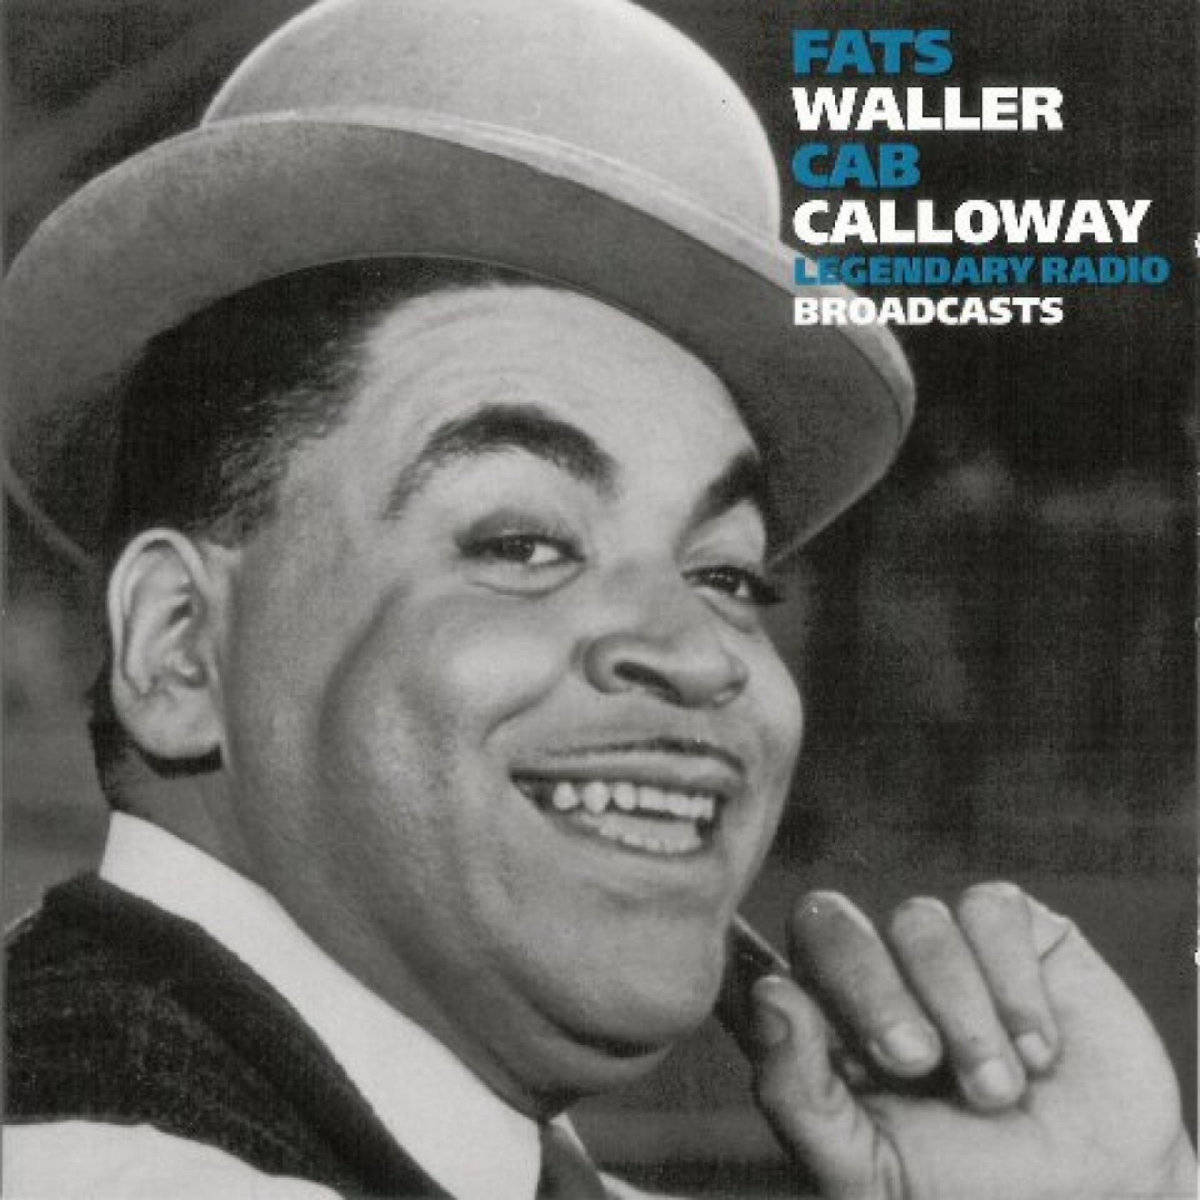 Fatswaller Cab Calloway Legendäre Radioaufnahmen 2008 Wallpaper